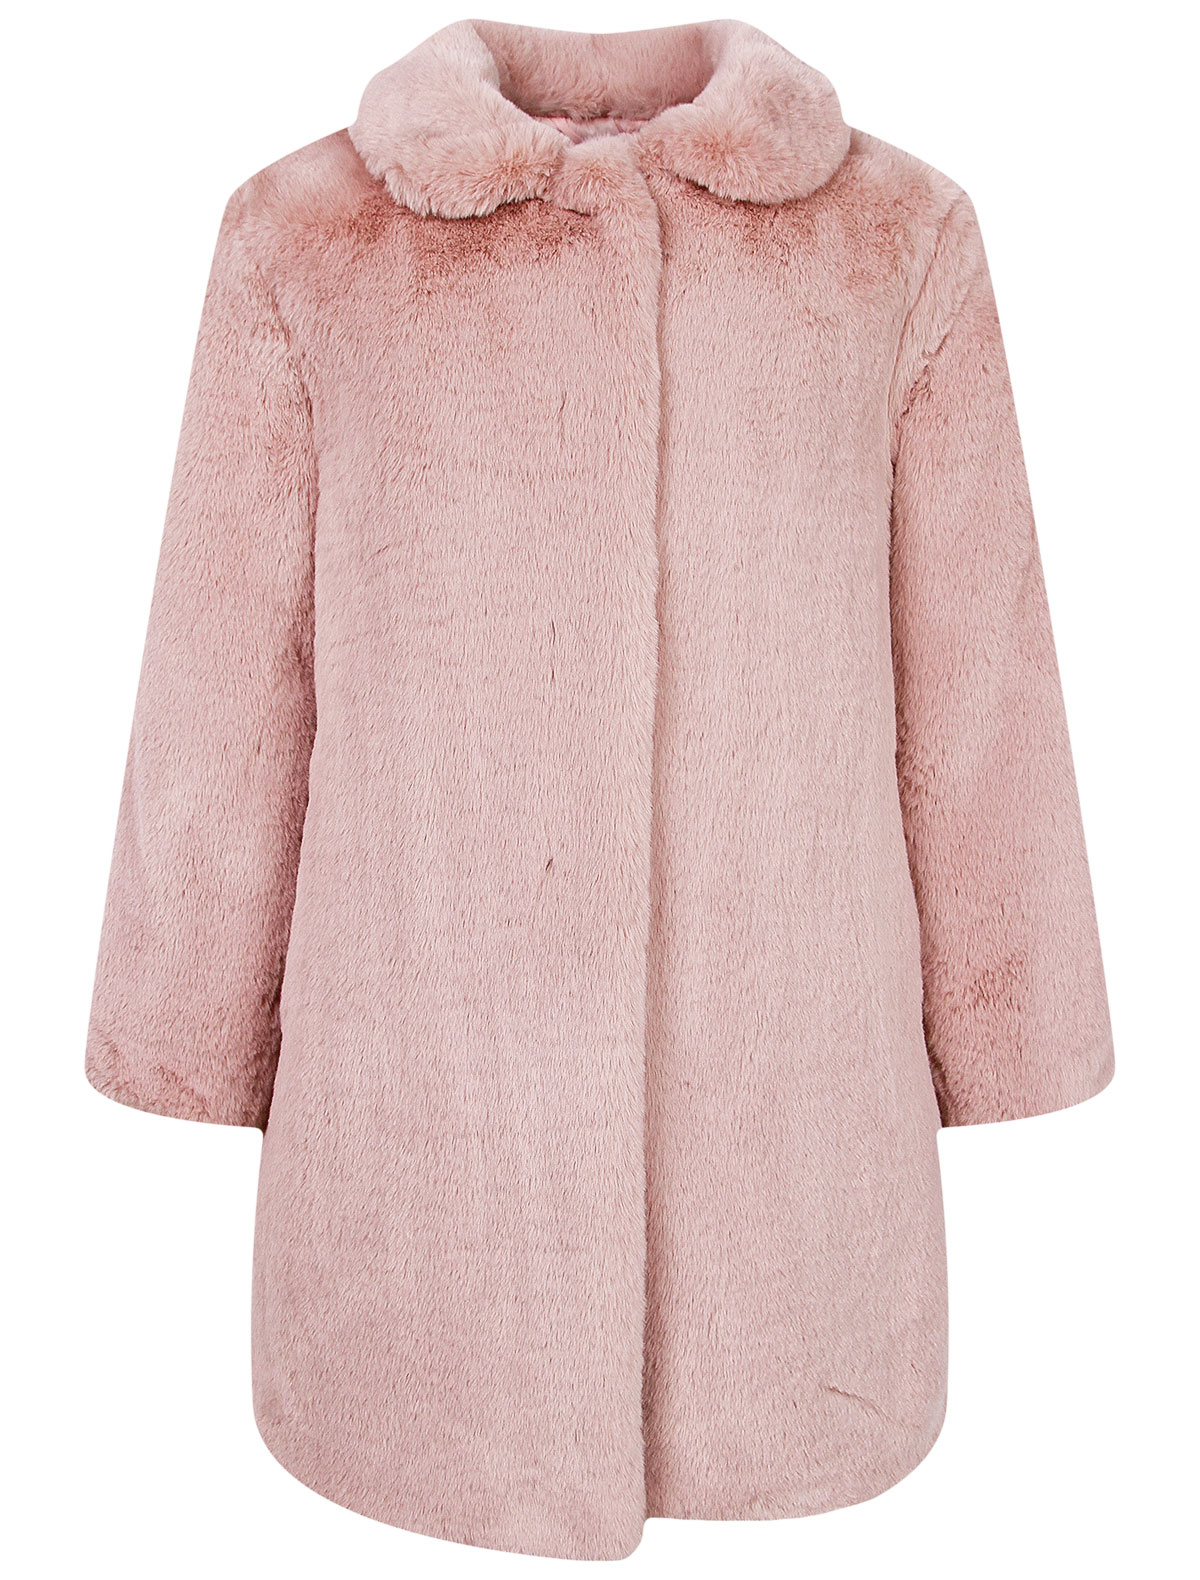 Пальто Il Gufo 2334380, цвет розовый, размер 9 1124509180441 - фото 1